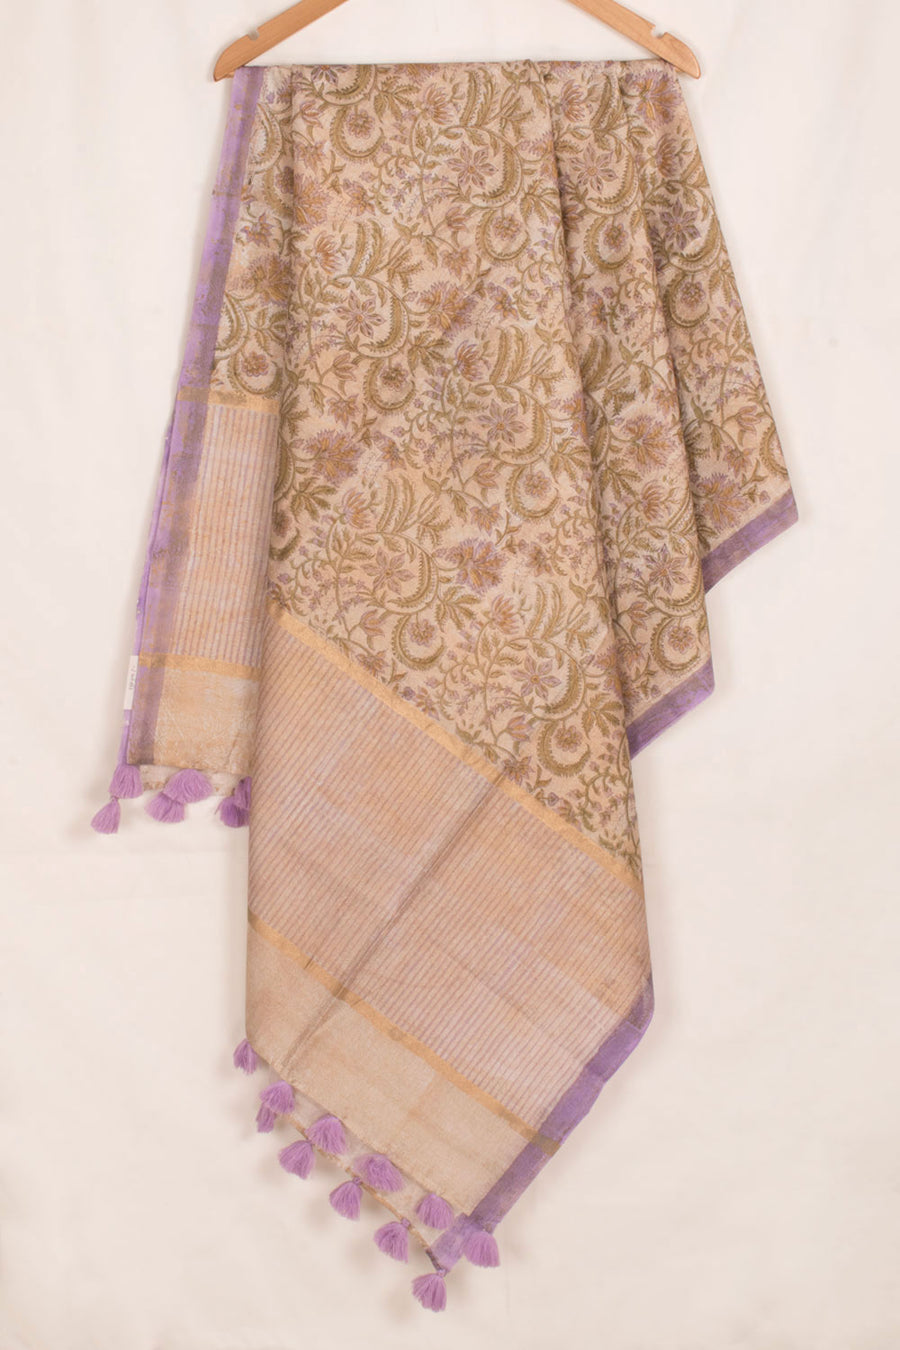 Hand Block Printed Chanderi Silk Cotton Dupatta with Floral Design and Metallic Overlay